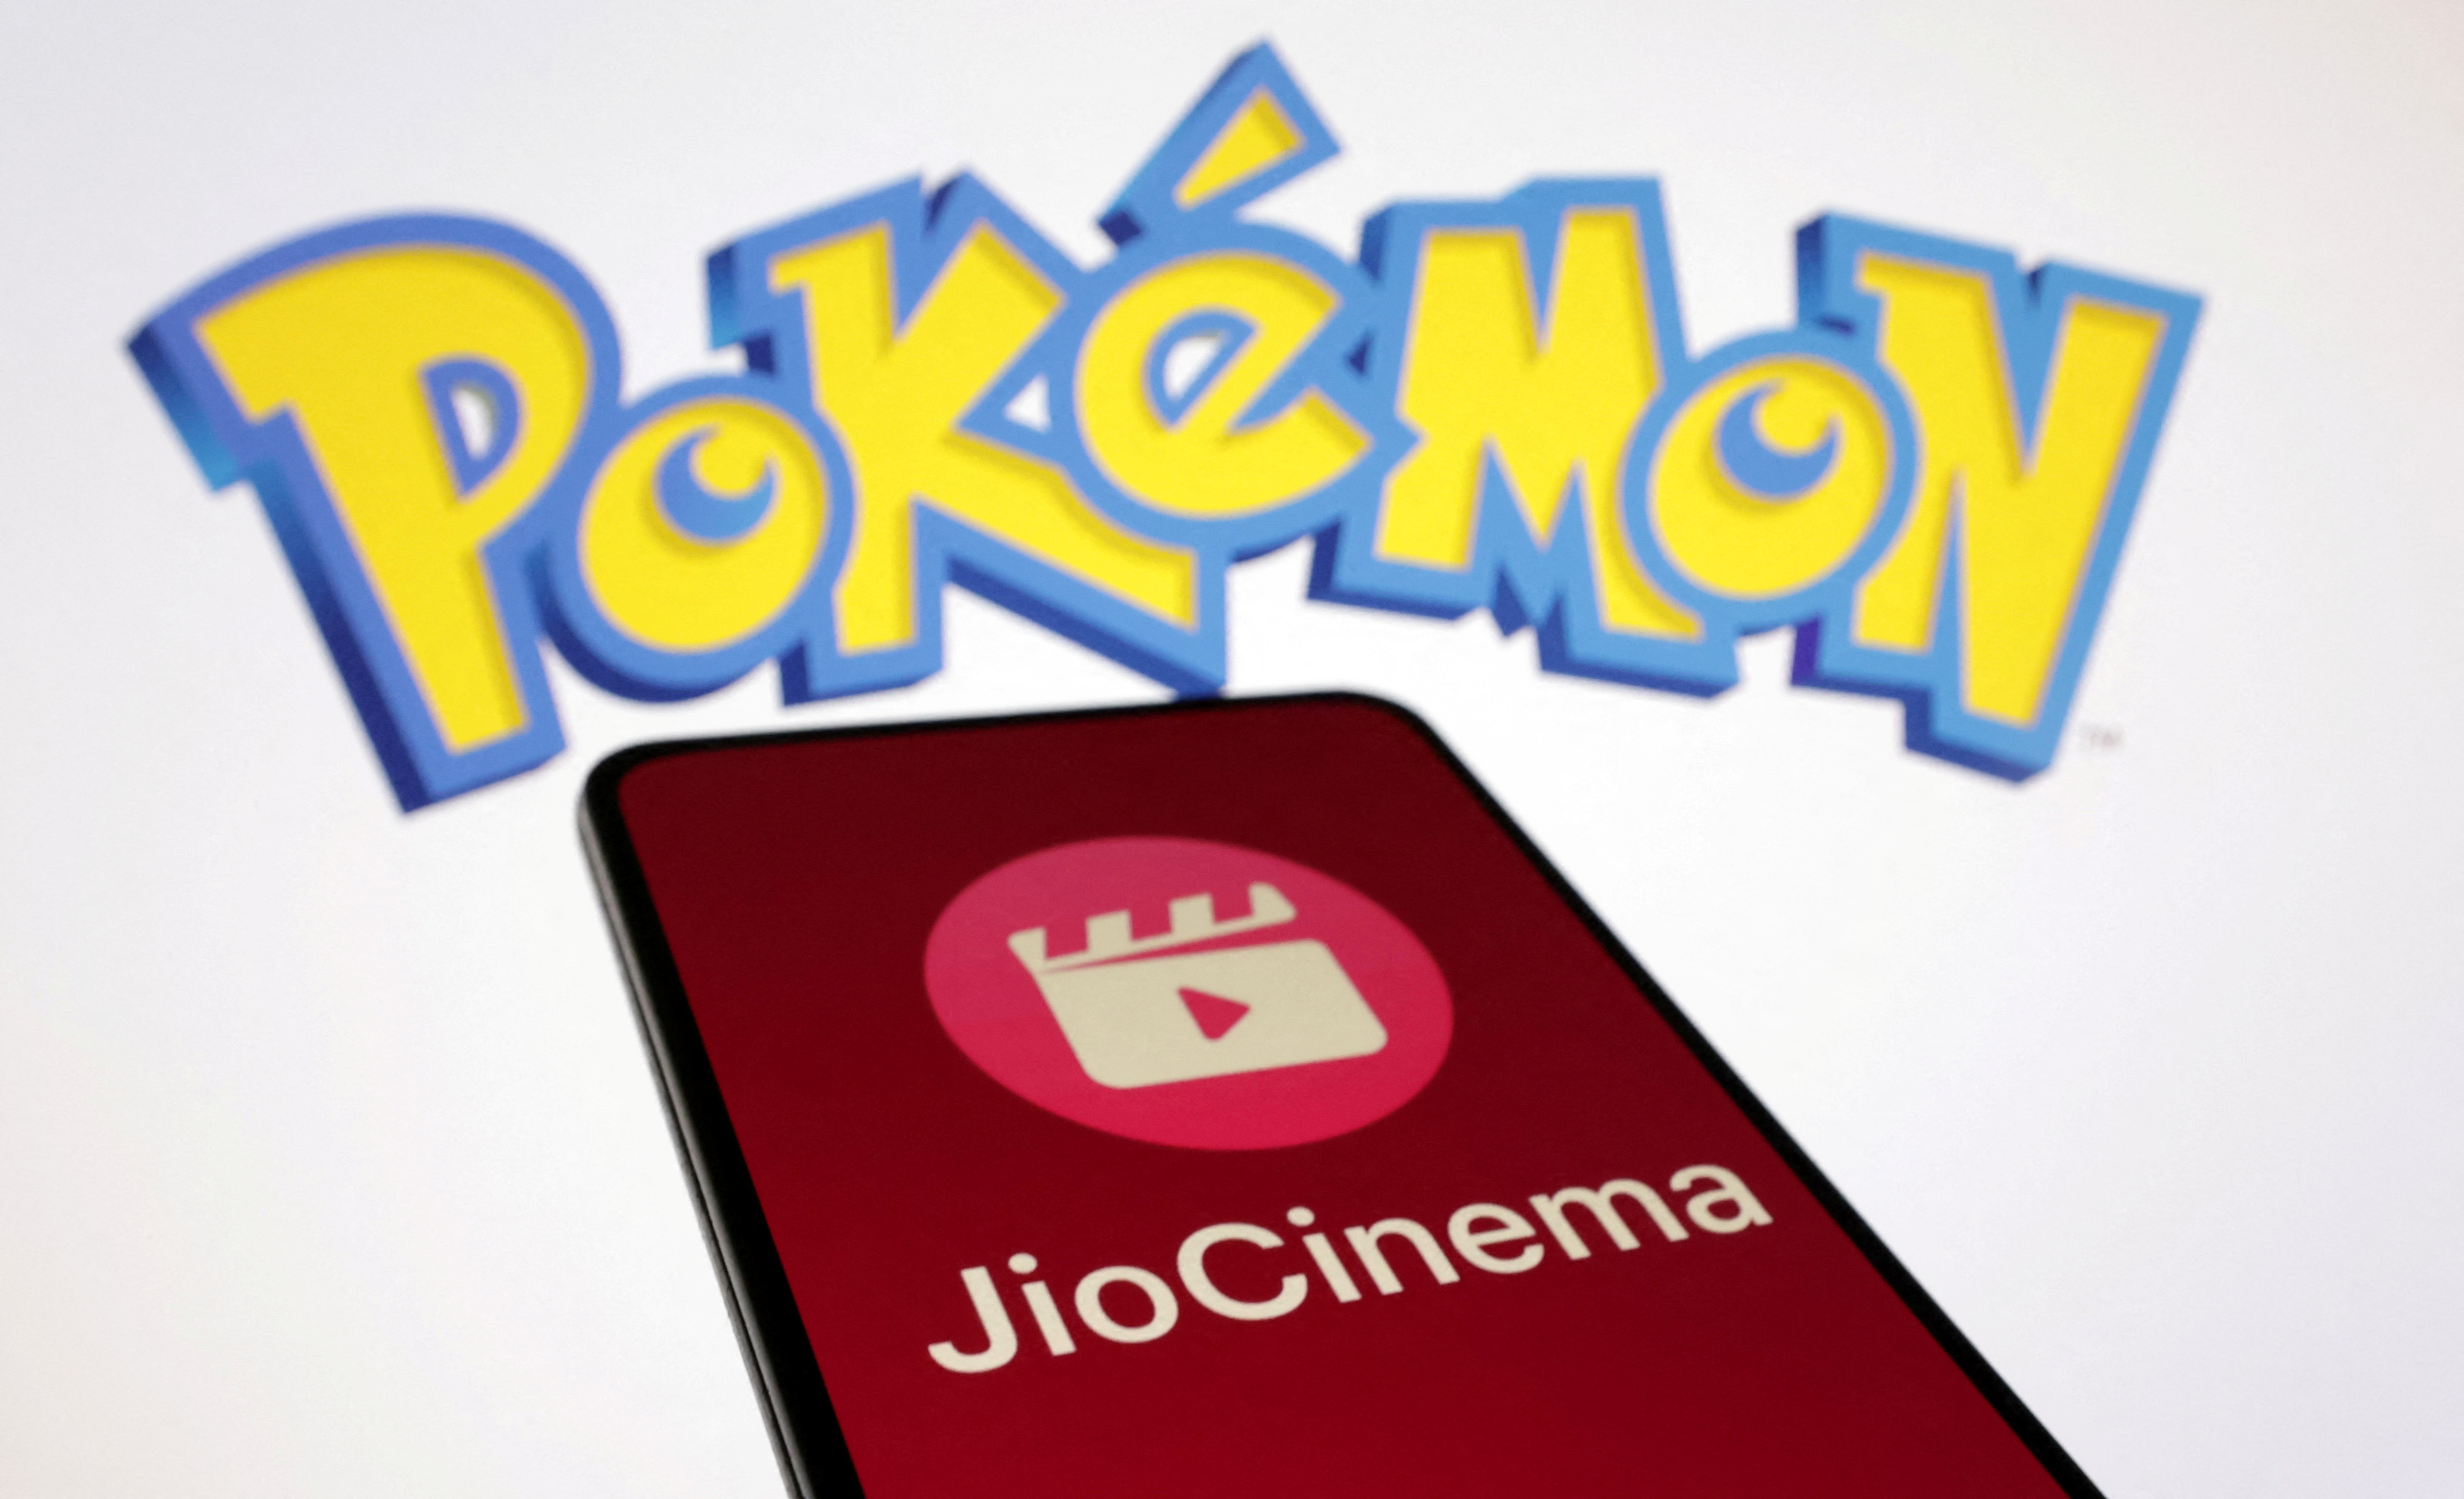 Pokemon Asia  Channel says it will resume streaming Pokemon